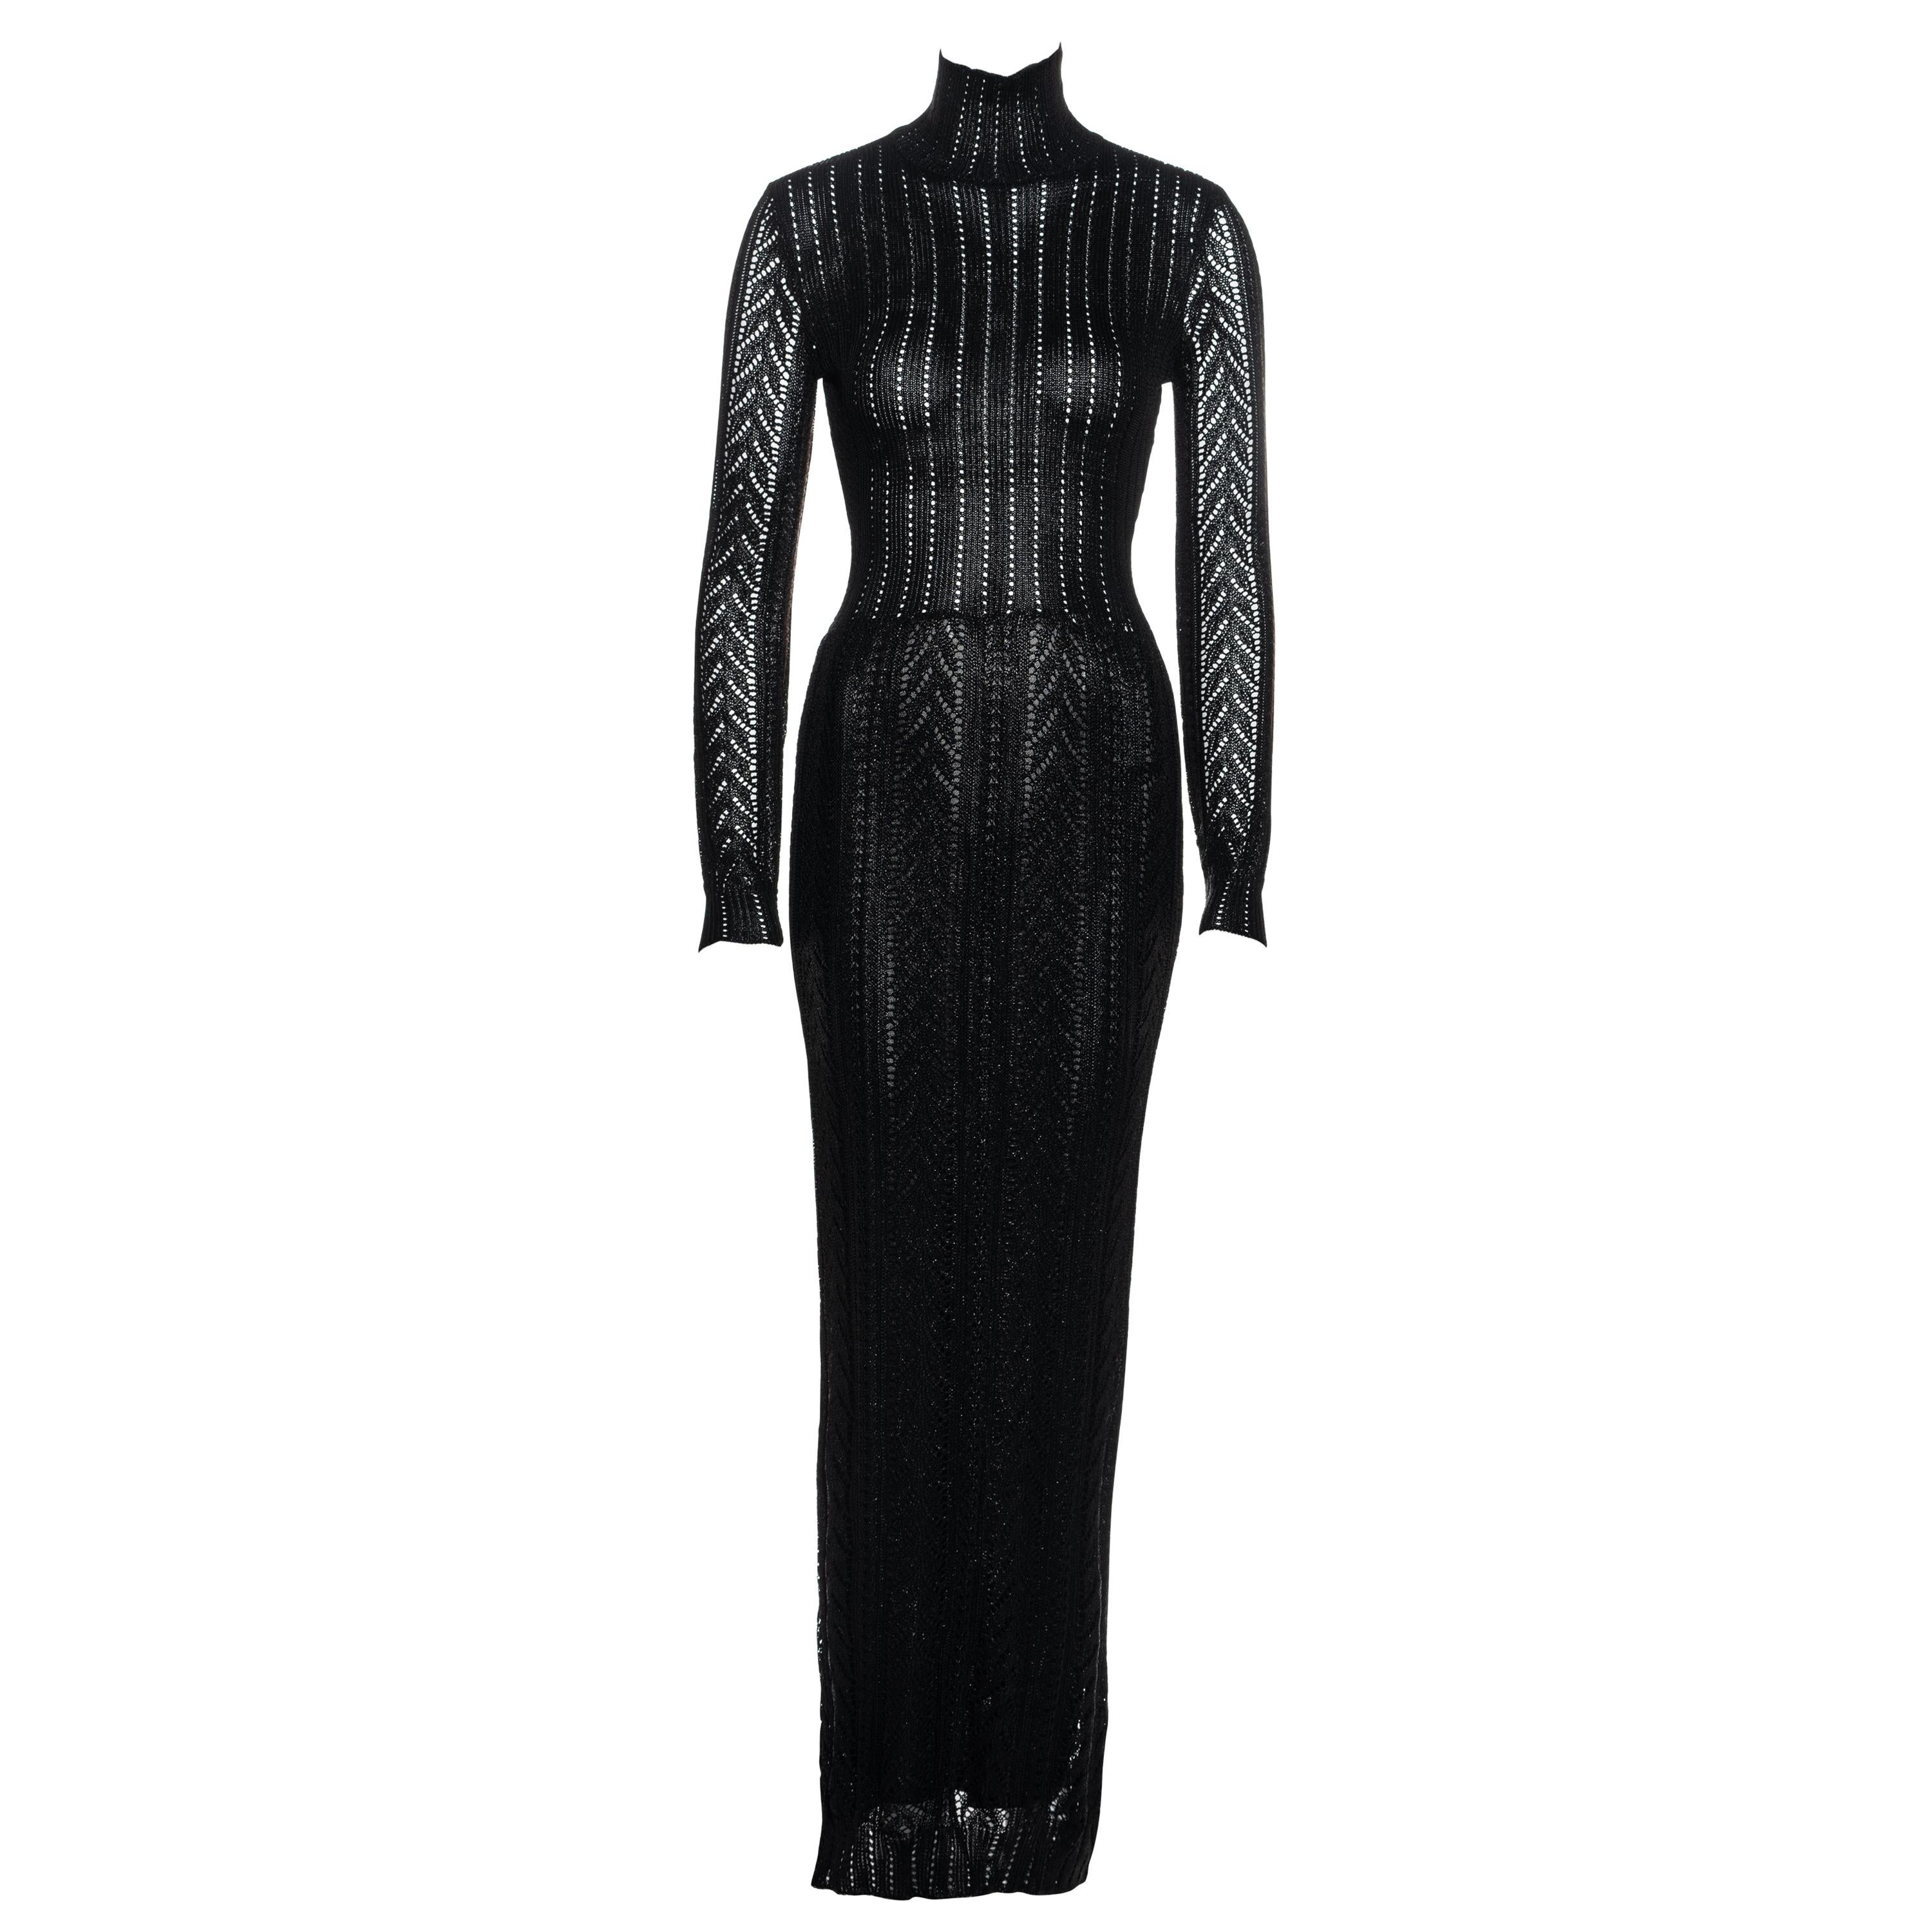 Christian Dior by John Galliano black metallic crochet knit maxi dress, fw 1999